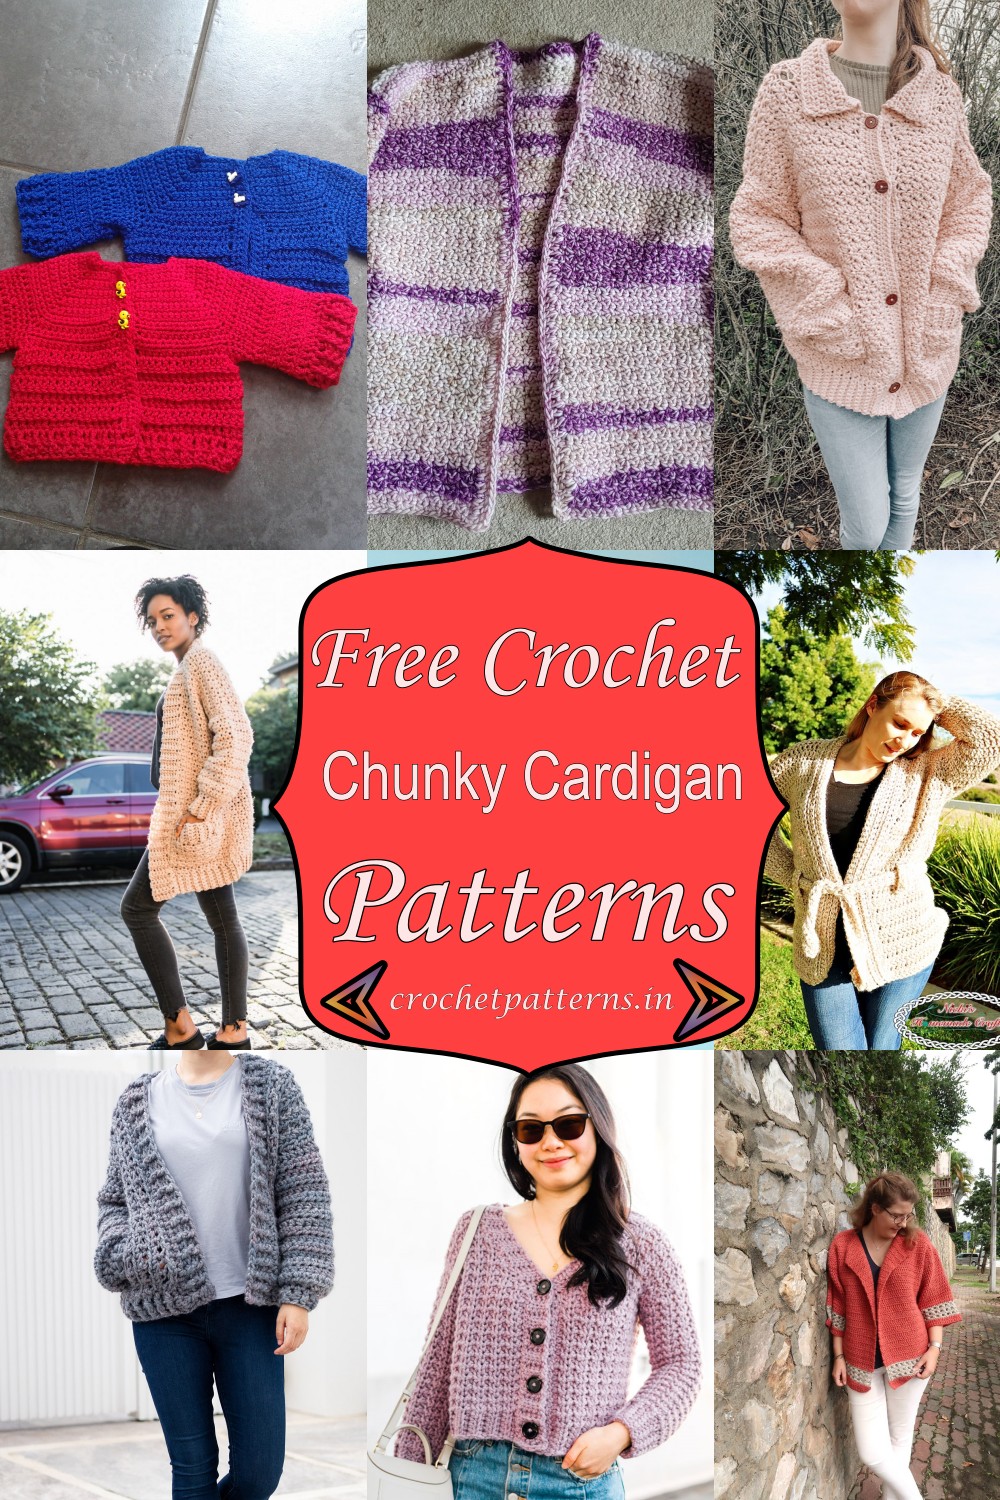  Free Crochet Chunky Cardigan Patterns